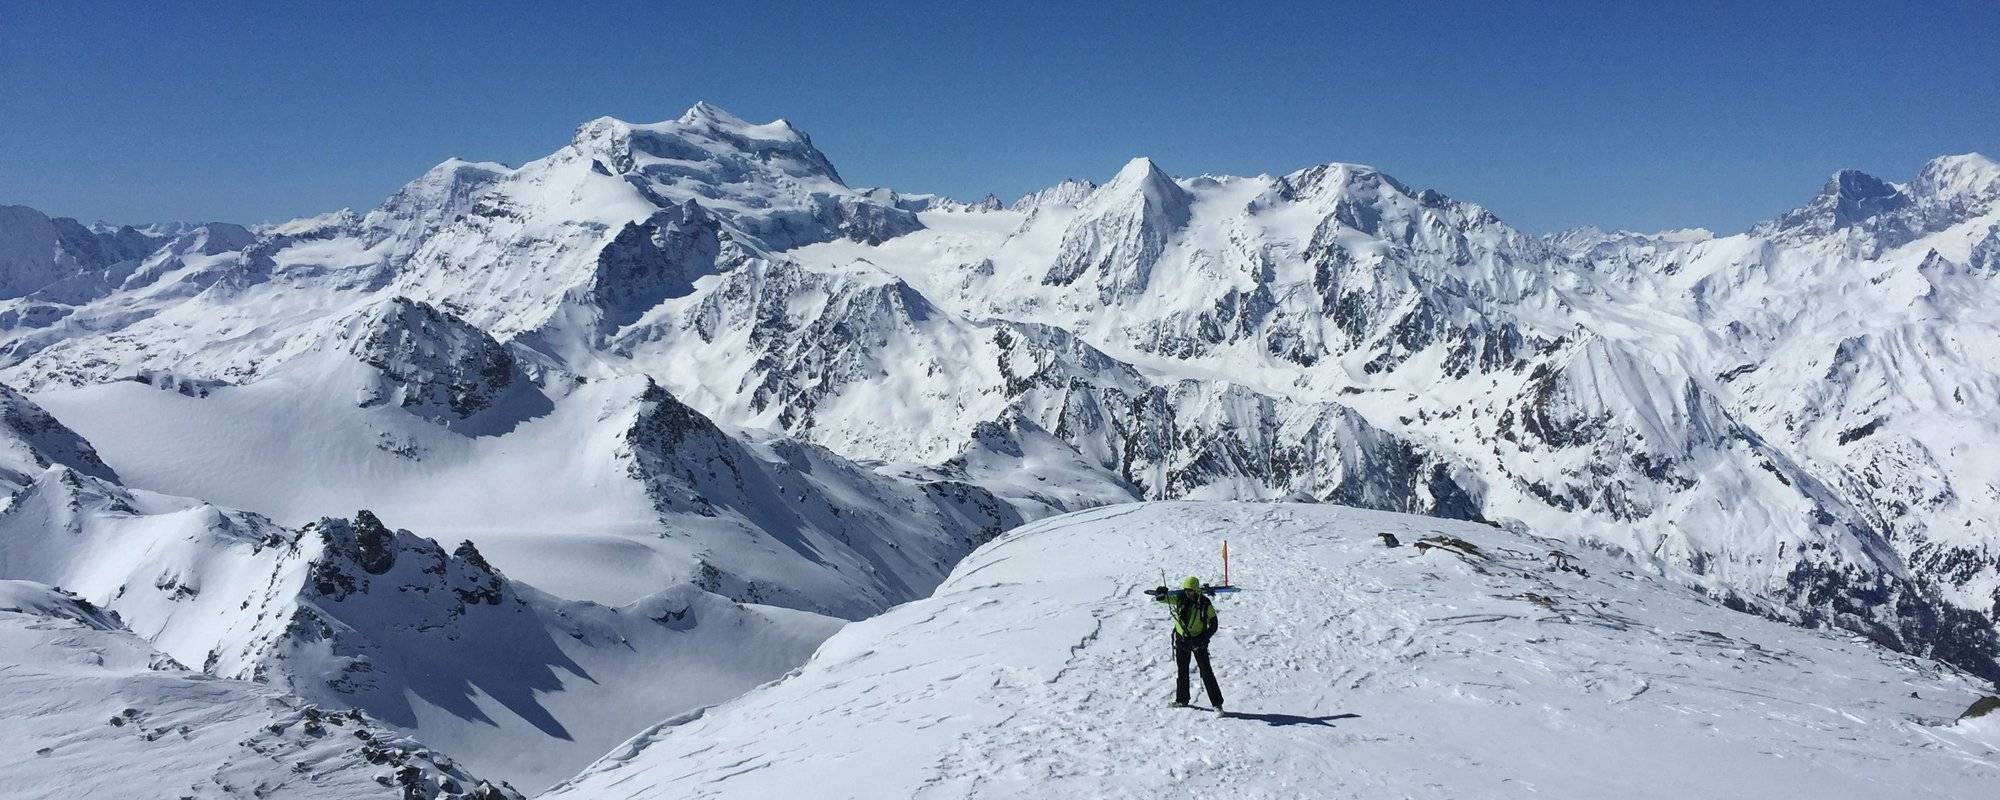 HELI SKIING ADVENTURE in The Swiss Alps